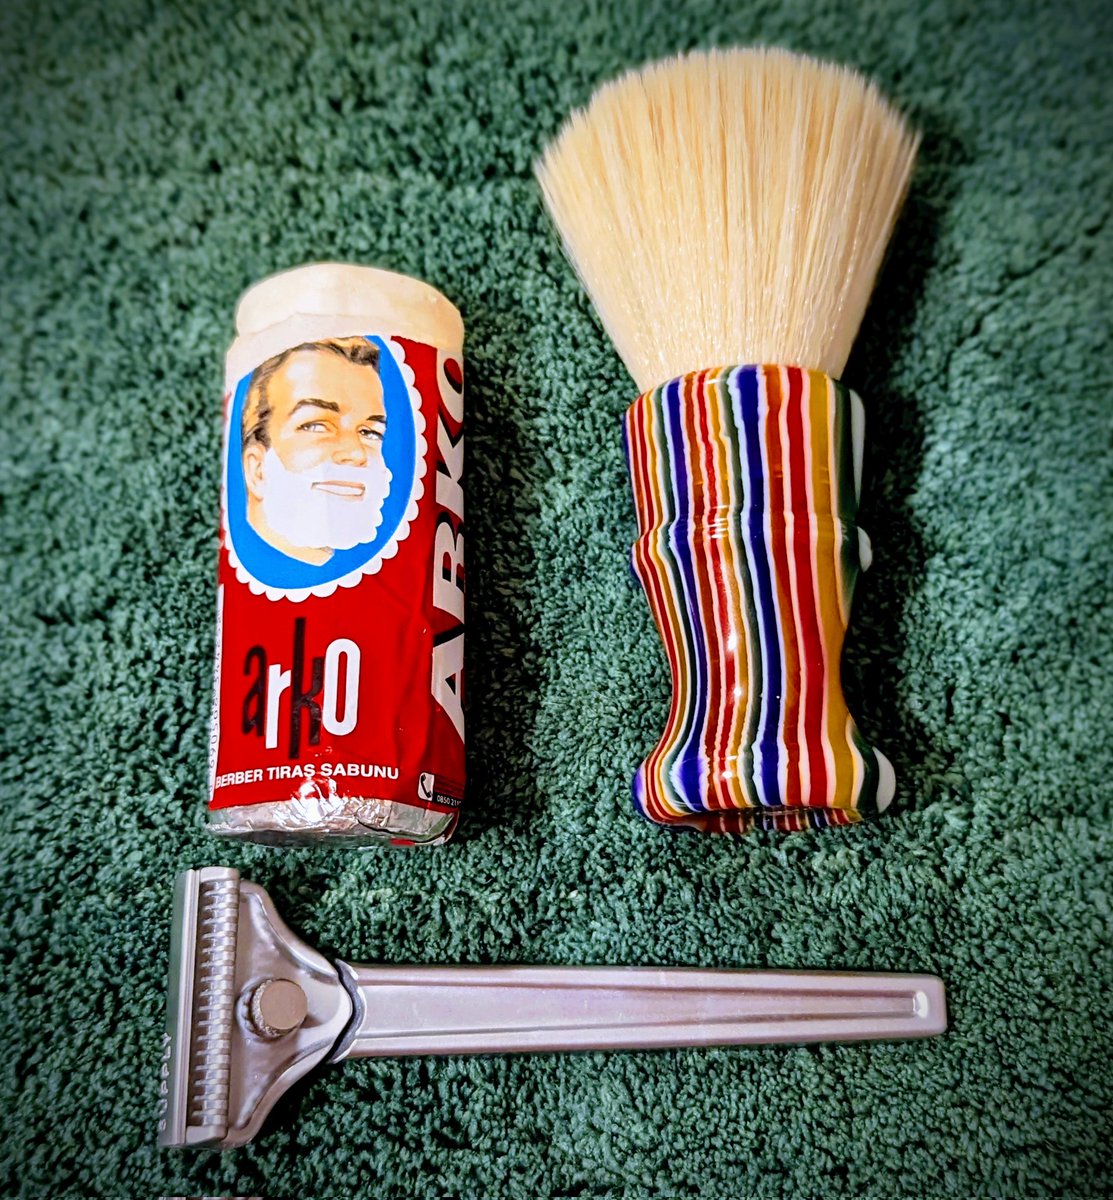 #sotd 07/11/2023

Razor: @getsupply Injector
Brush: AP Shave Candy Stripe
Soap: Arko stick

#wetshaving